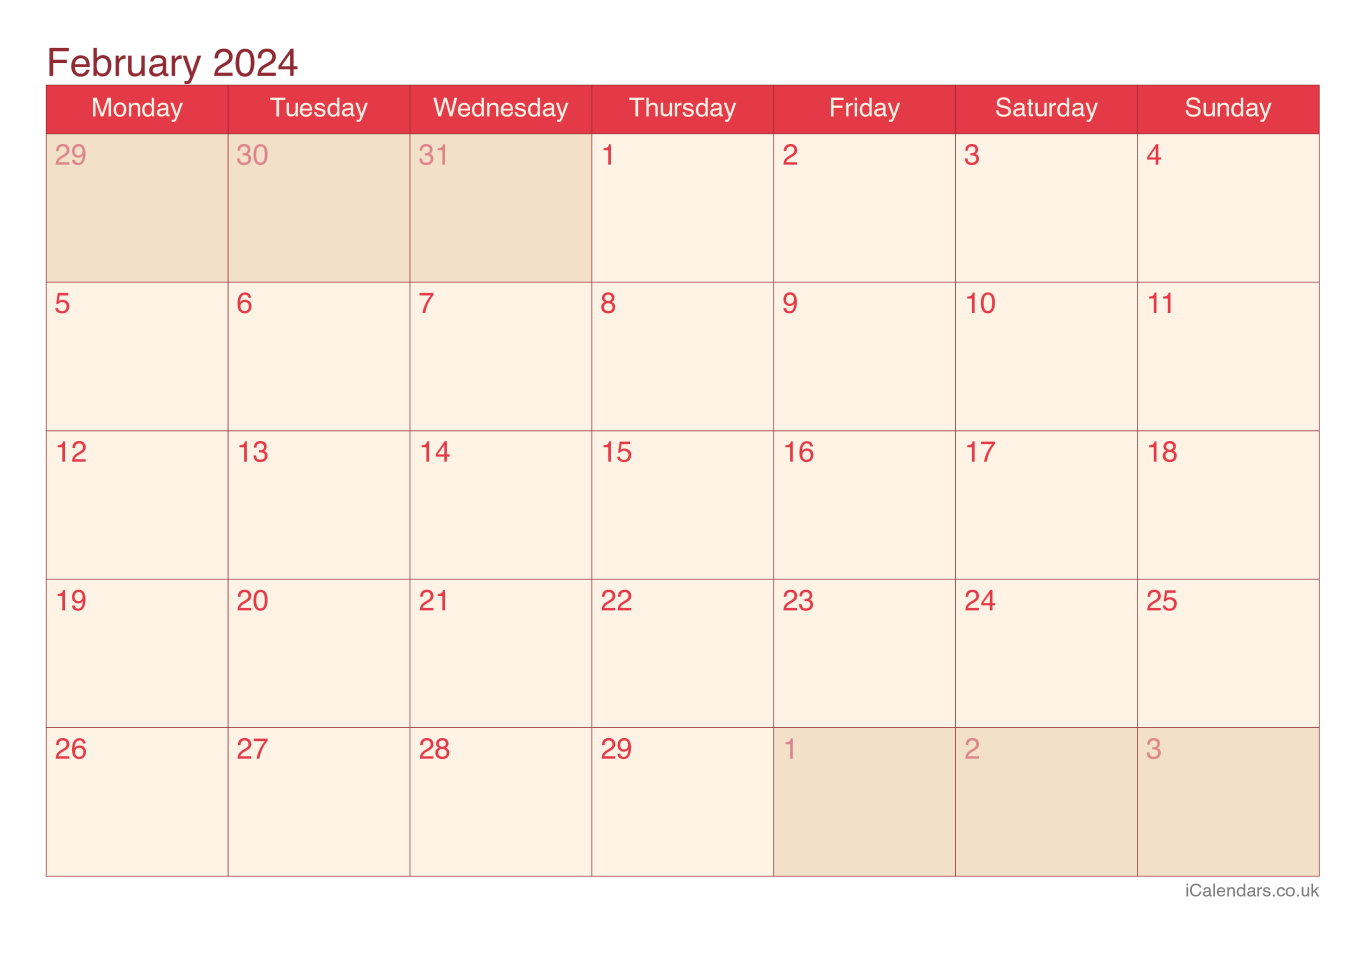 Calendar February 2024 - Cherry